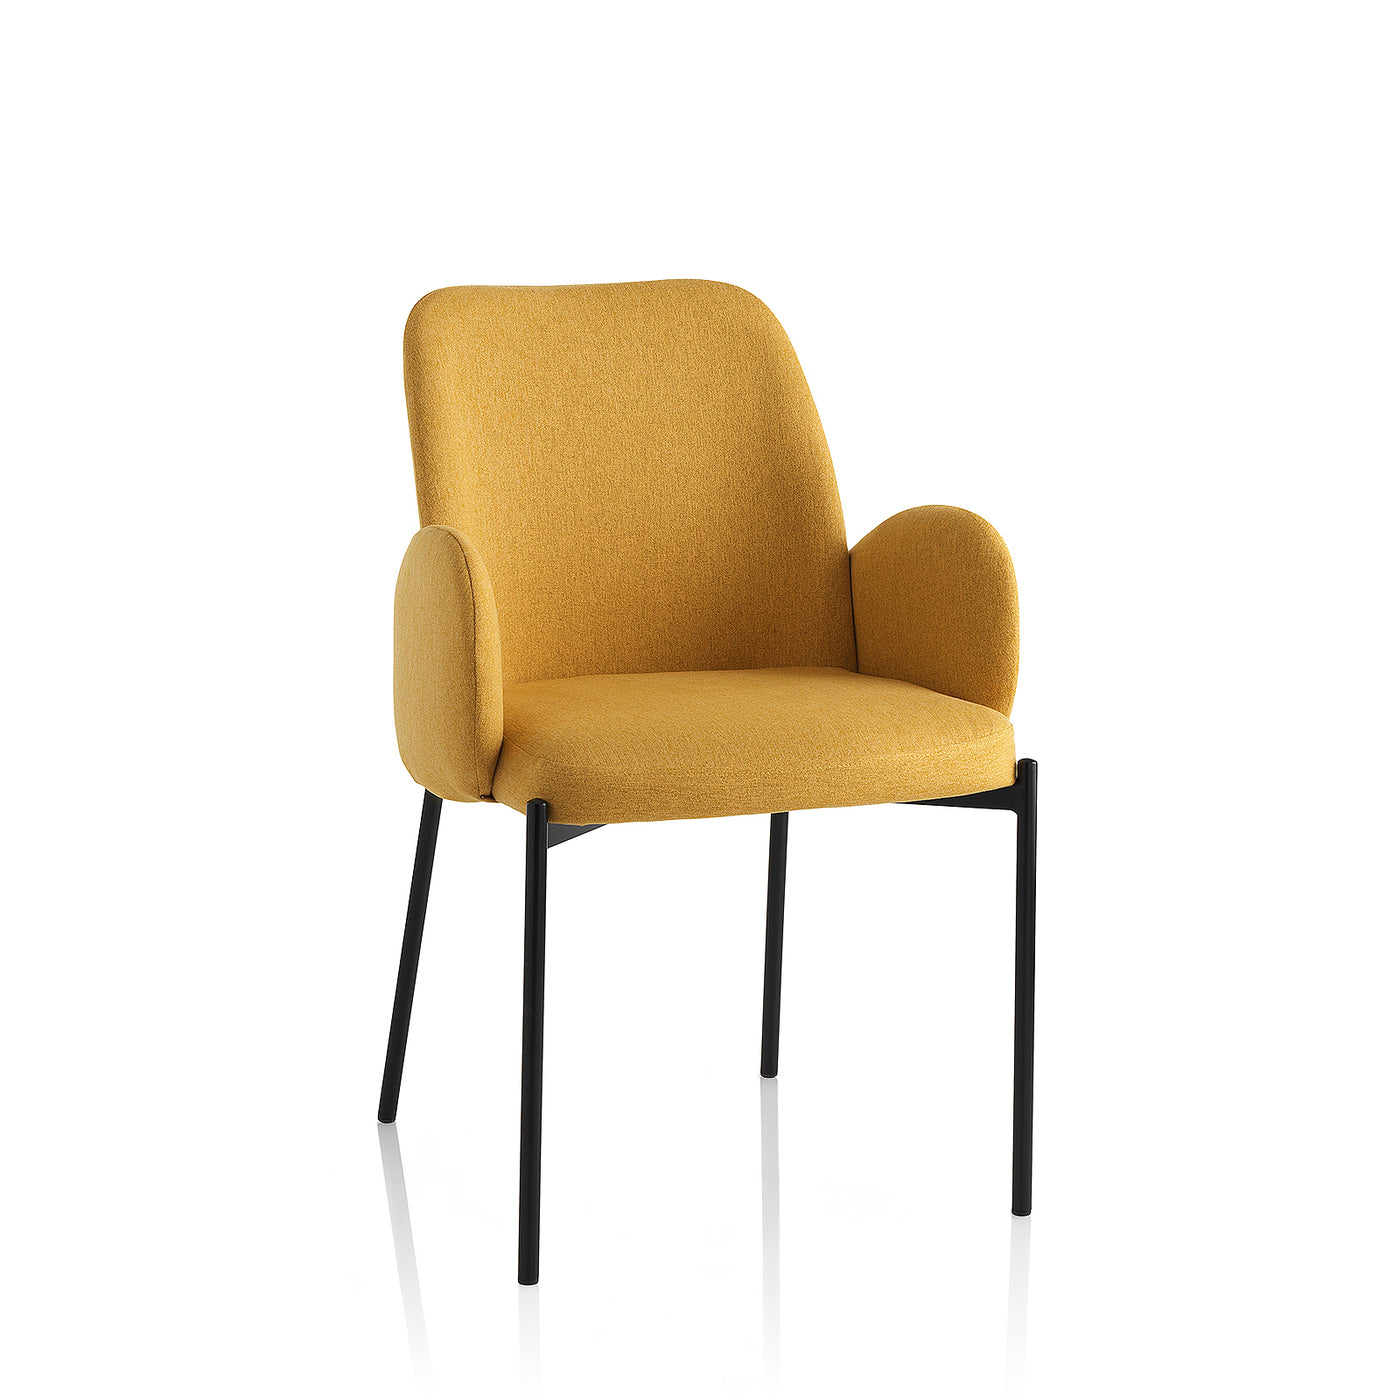 Set of 2 KIS mustard chairs